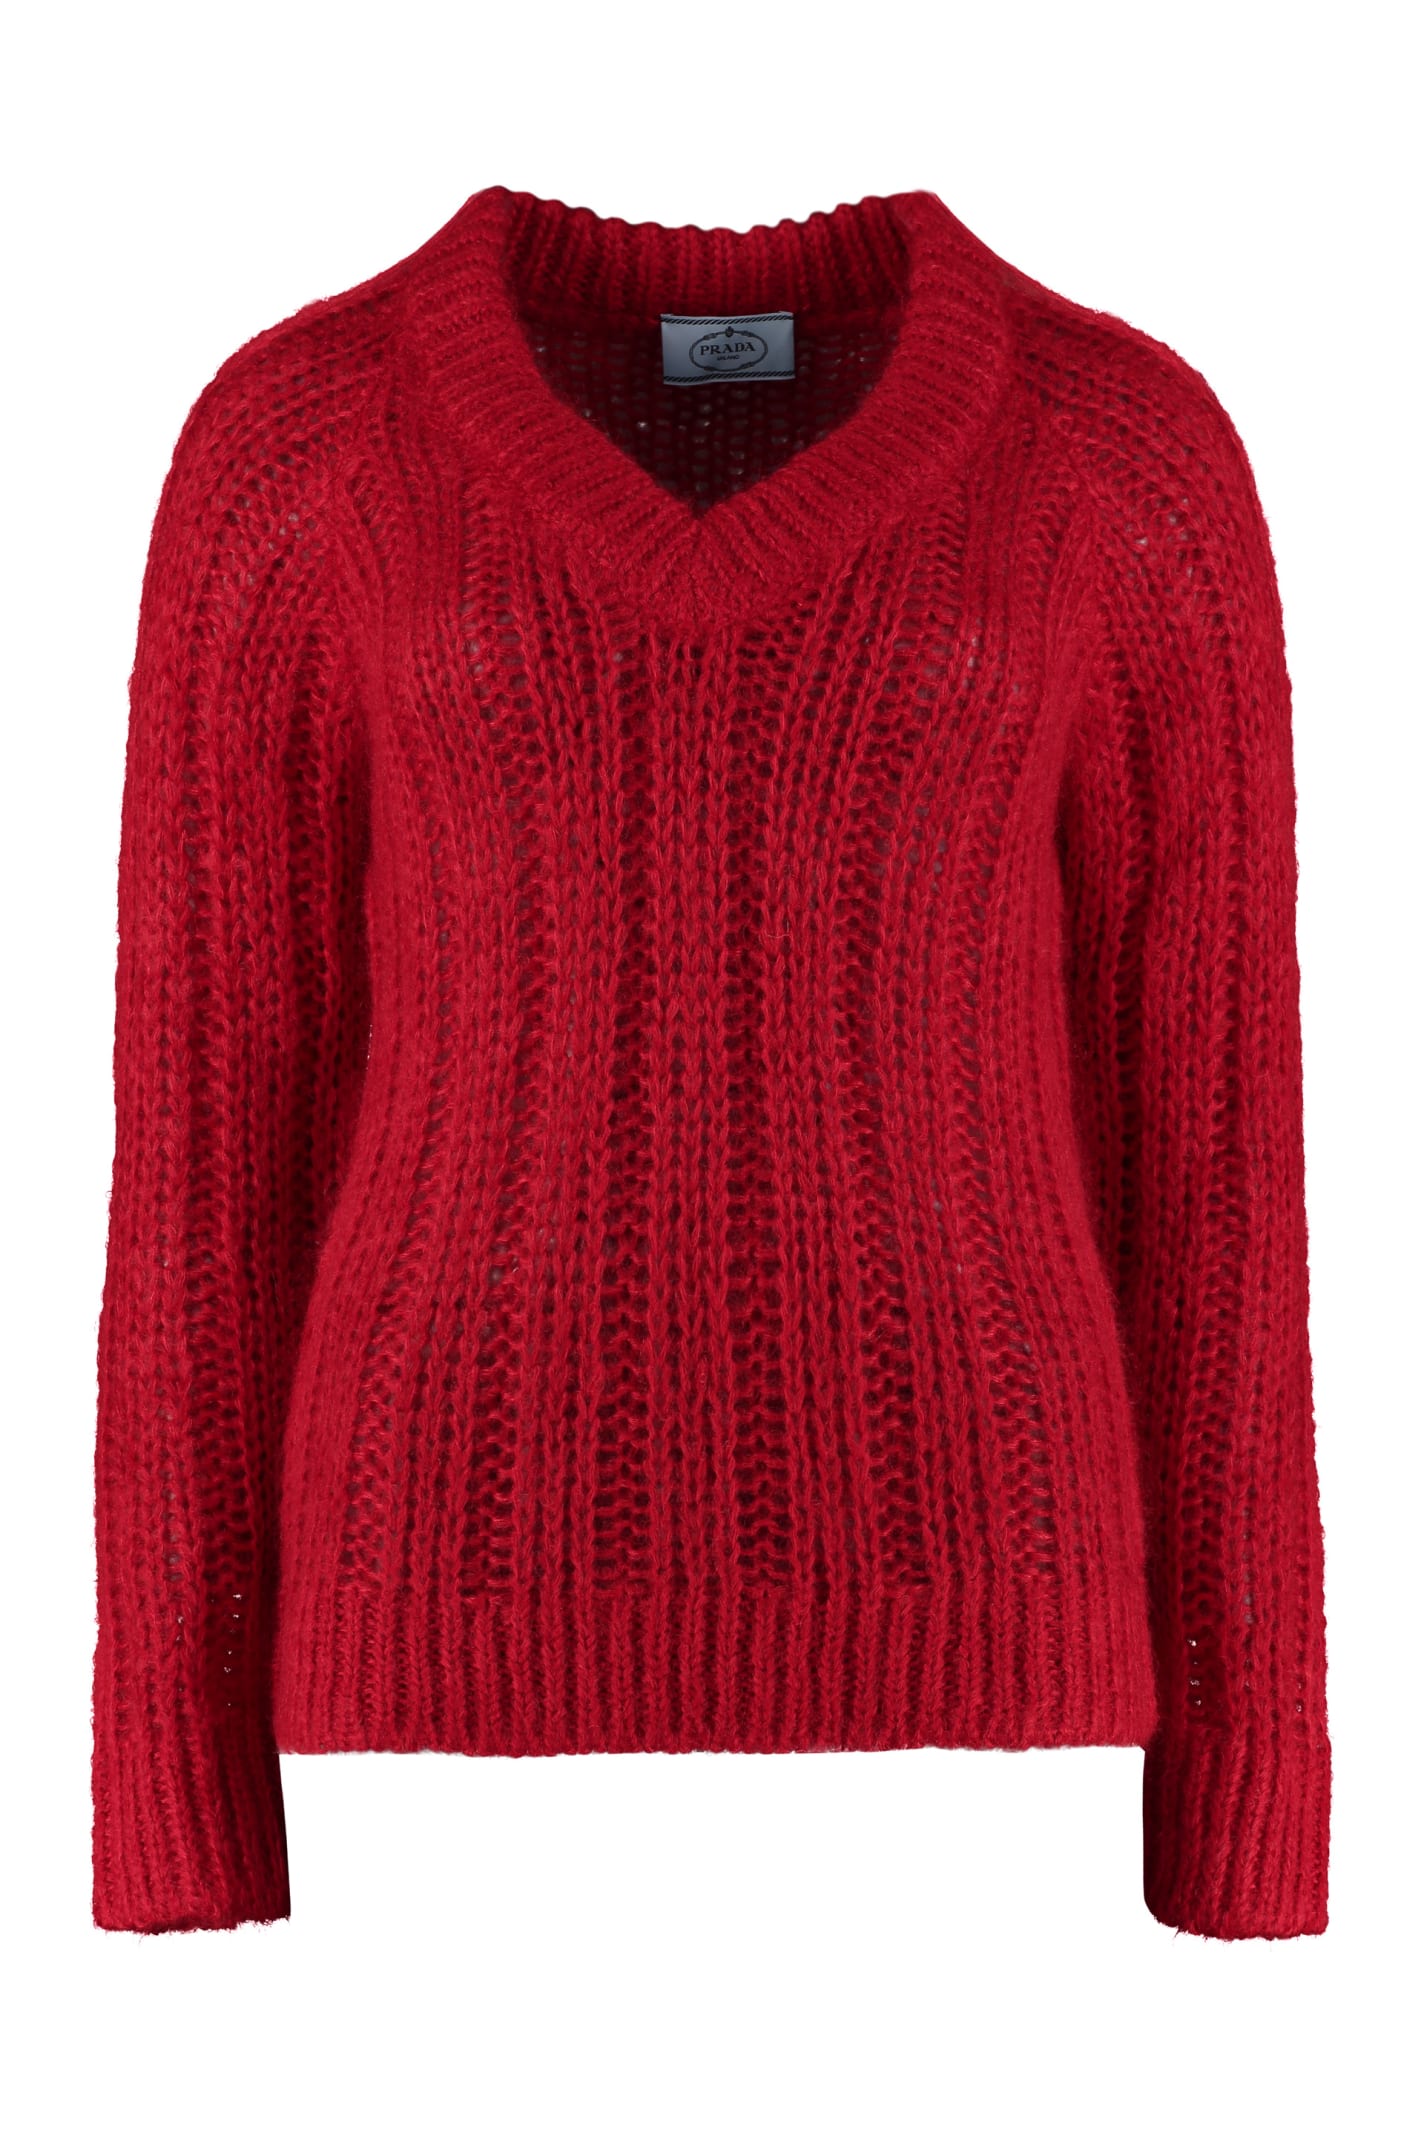 prada red sweater, OFF 77%,www 